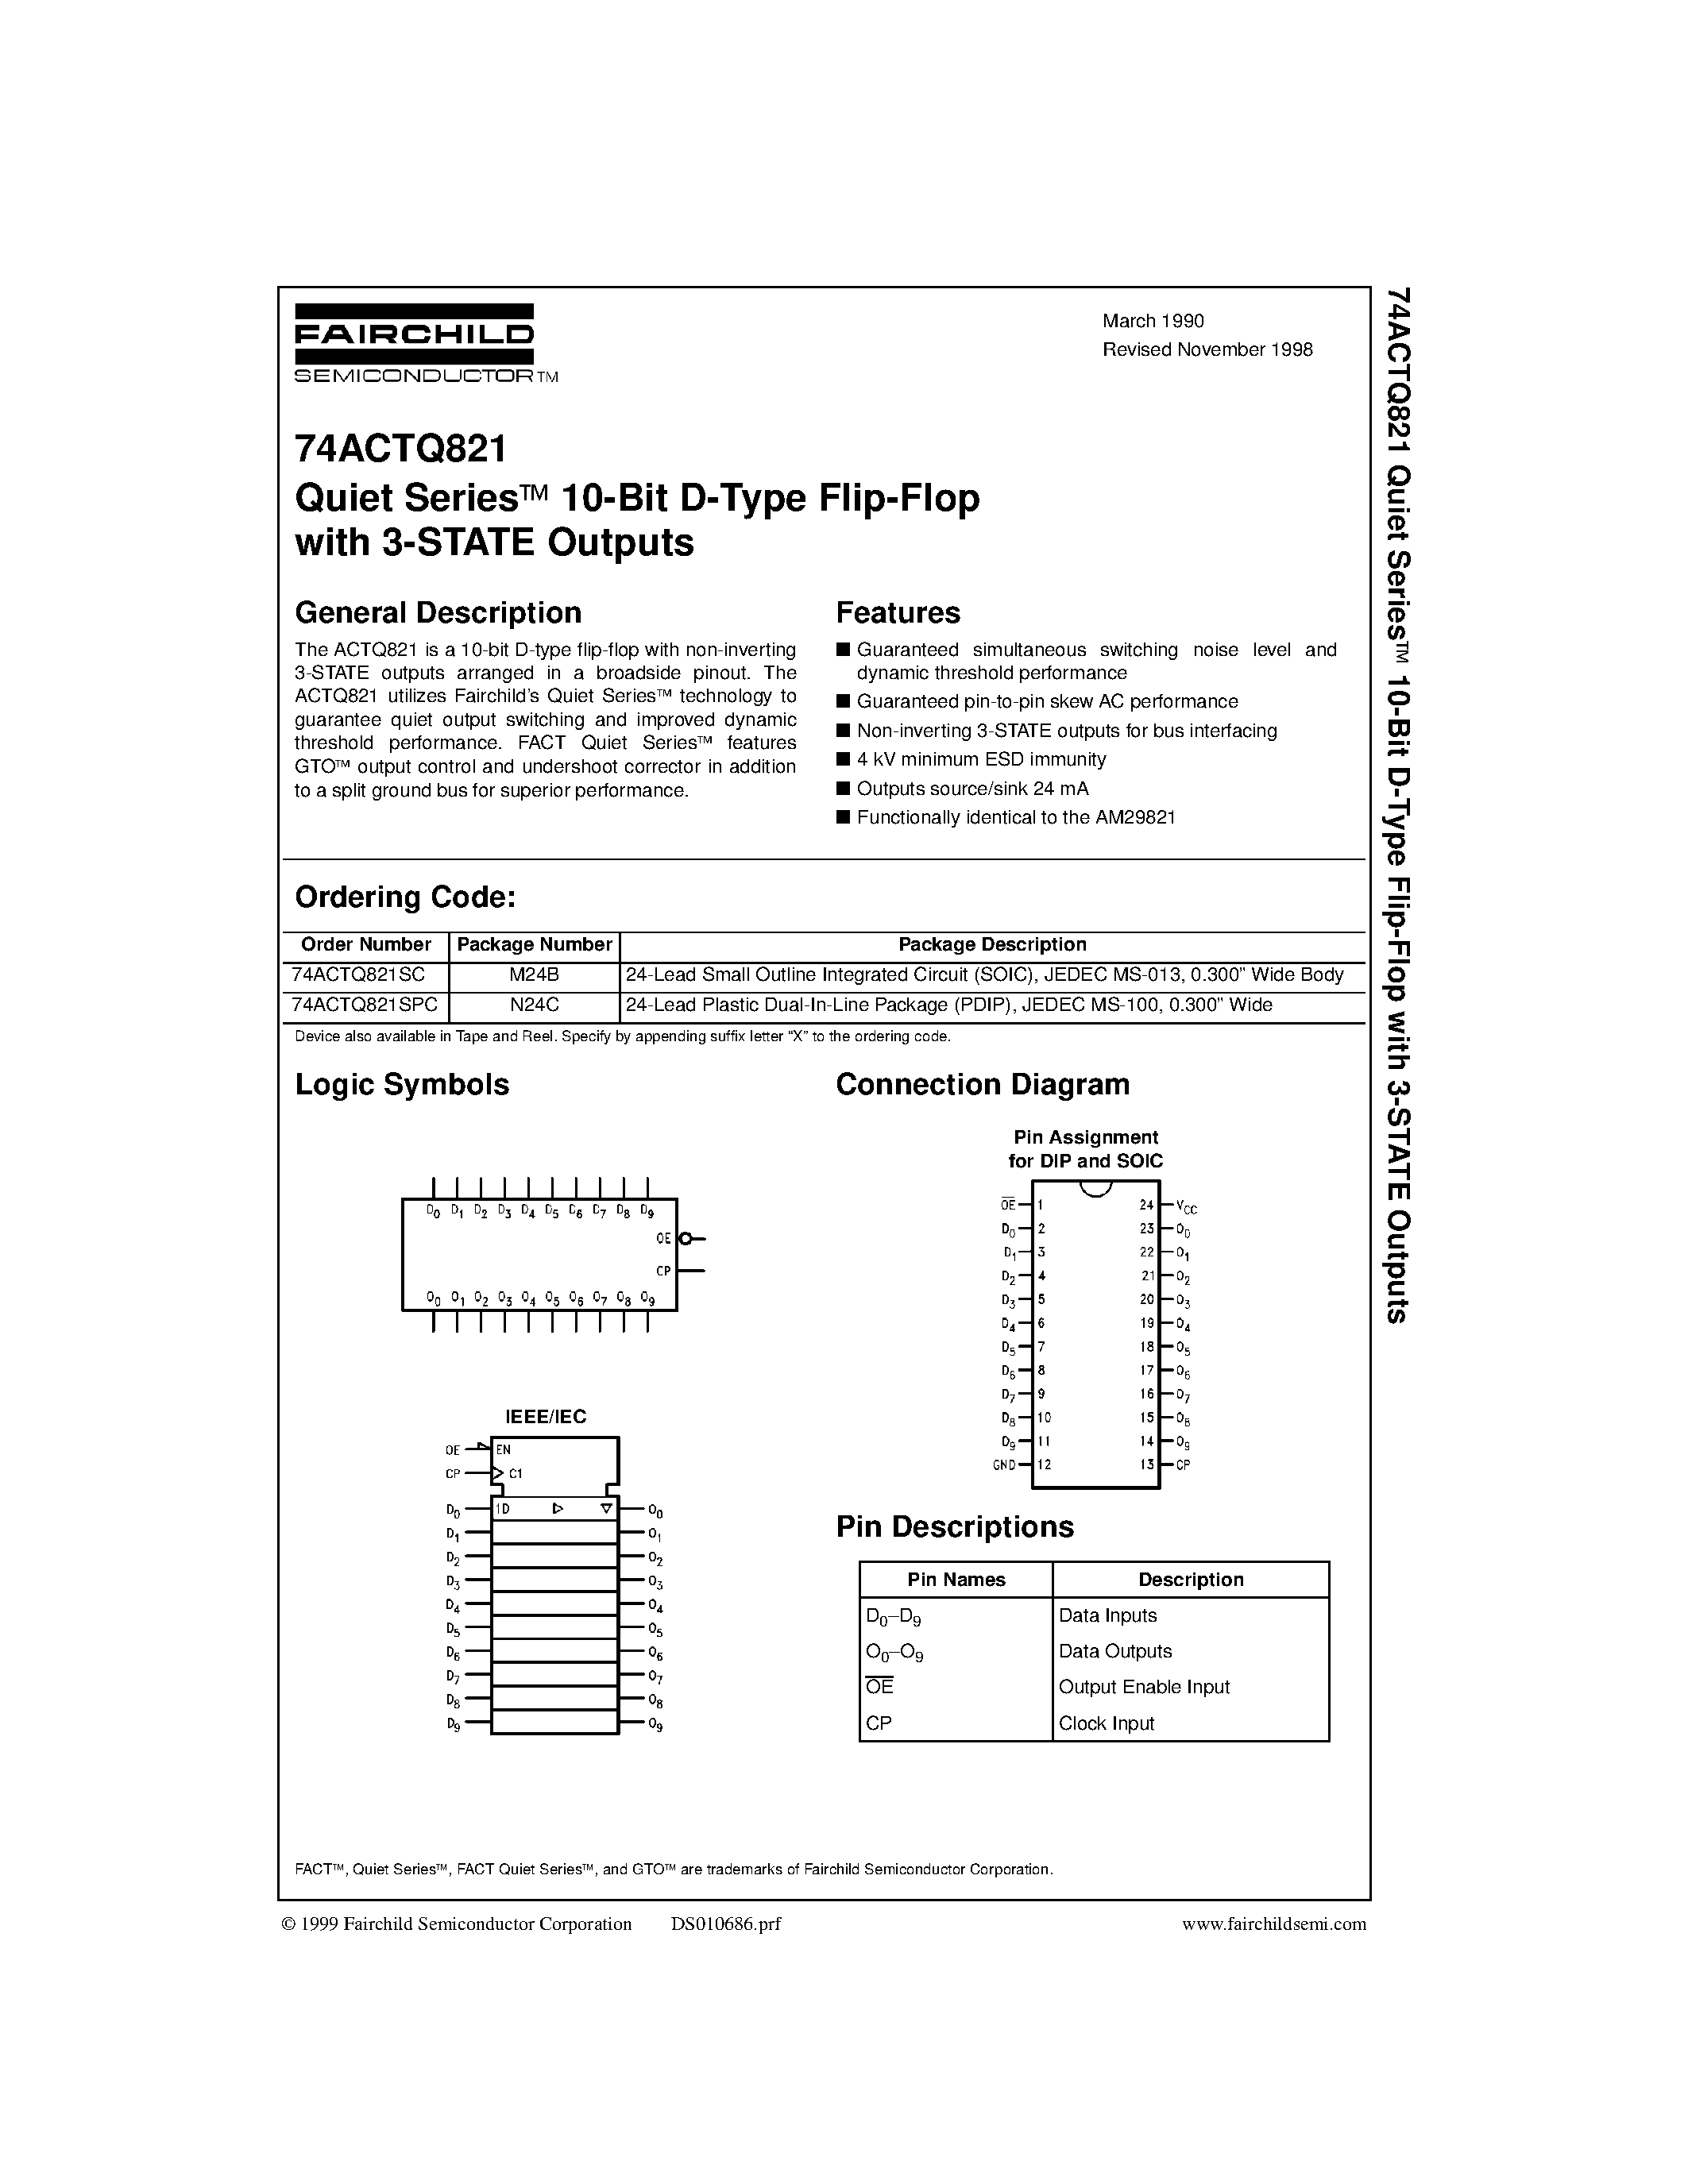 Даташит 74ACTQ821SPC - Quiet Seriesa 10-Bit D-Type Flip-Flop with 3-STATE Outputs страница 1